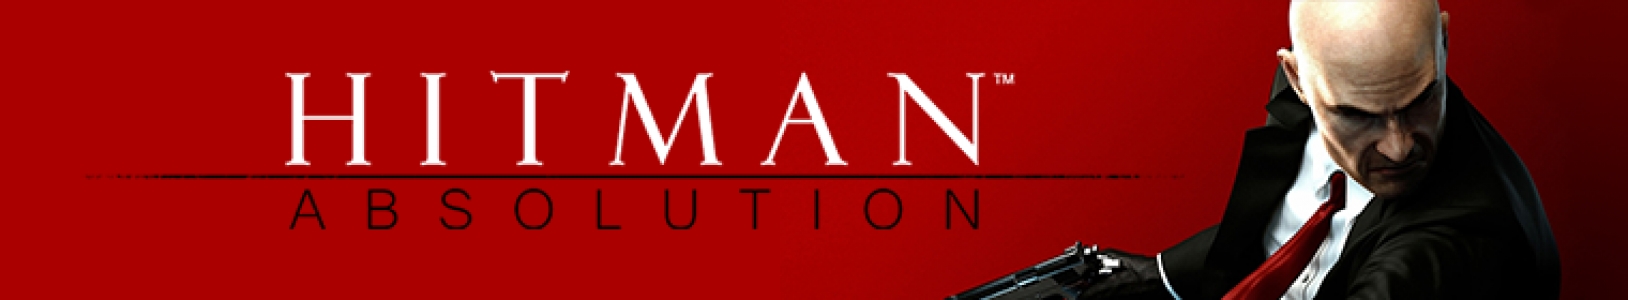 Hitman: Absolution banner